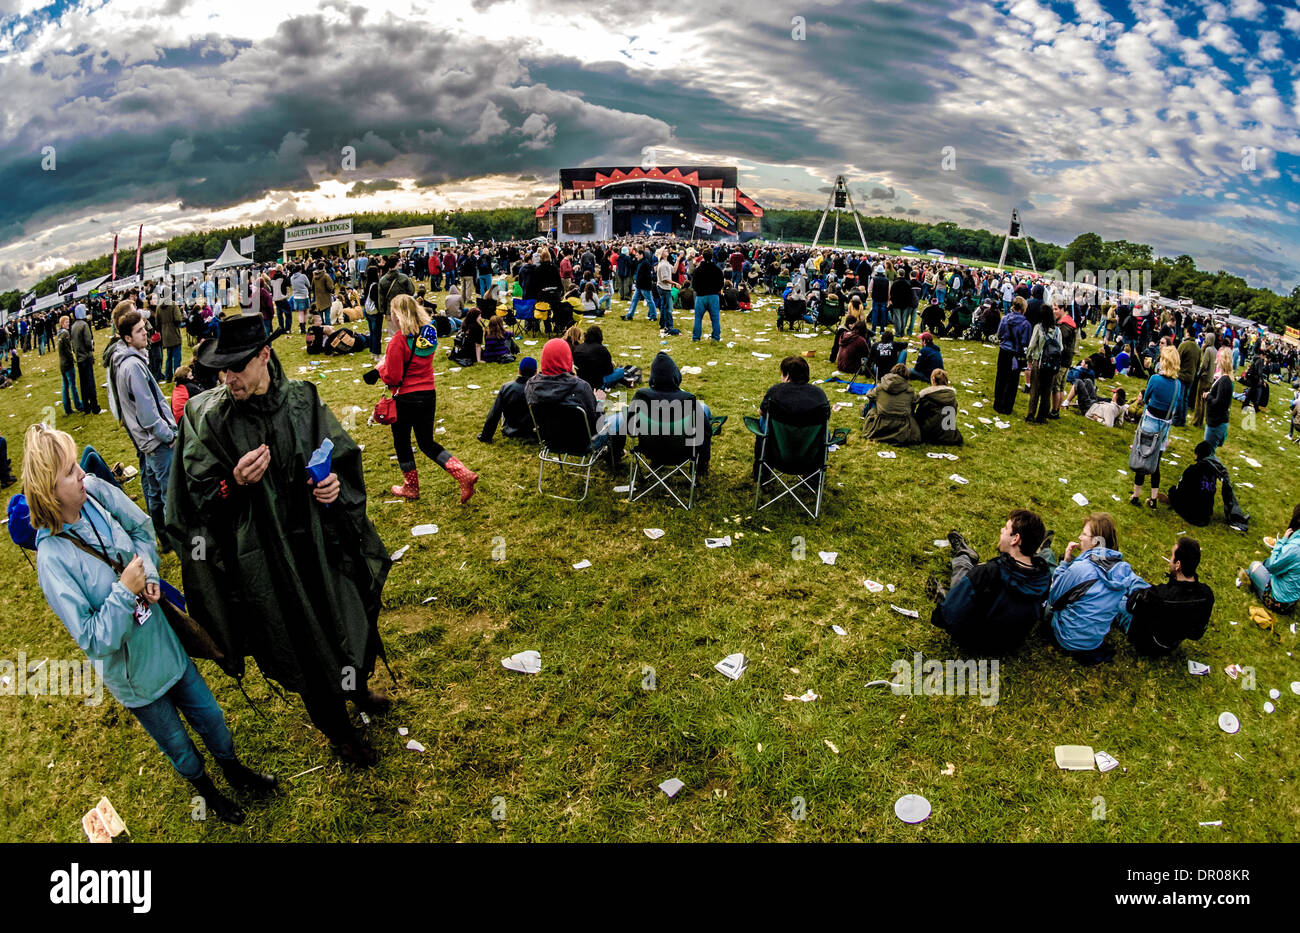 Leeds festival - crowd shot with fisheye lens. Stock Photo